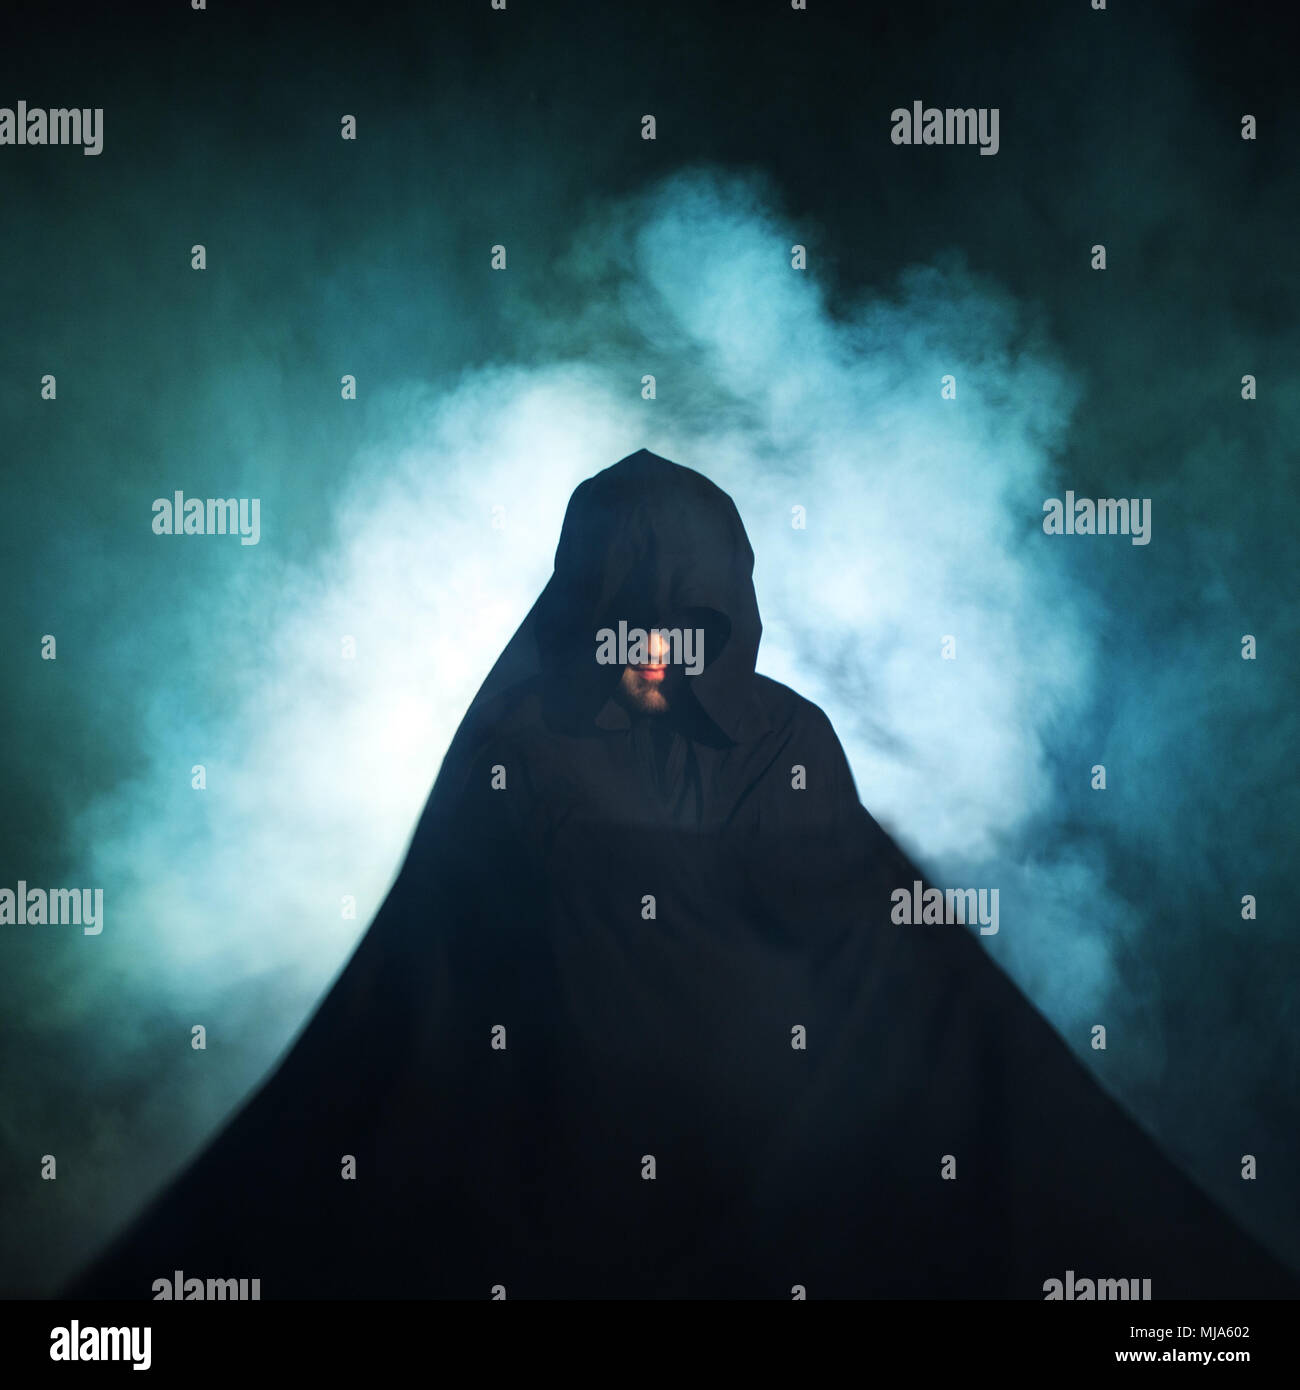 Gloomy image. Man in a black cloak. Demonic image. Magician illusionist. Smoke background Stock Photo